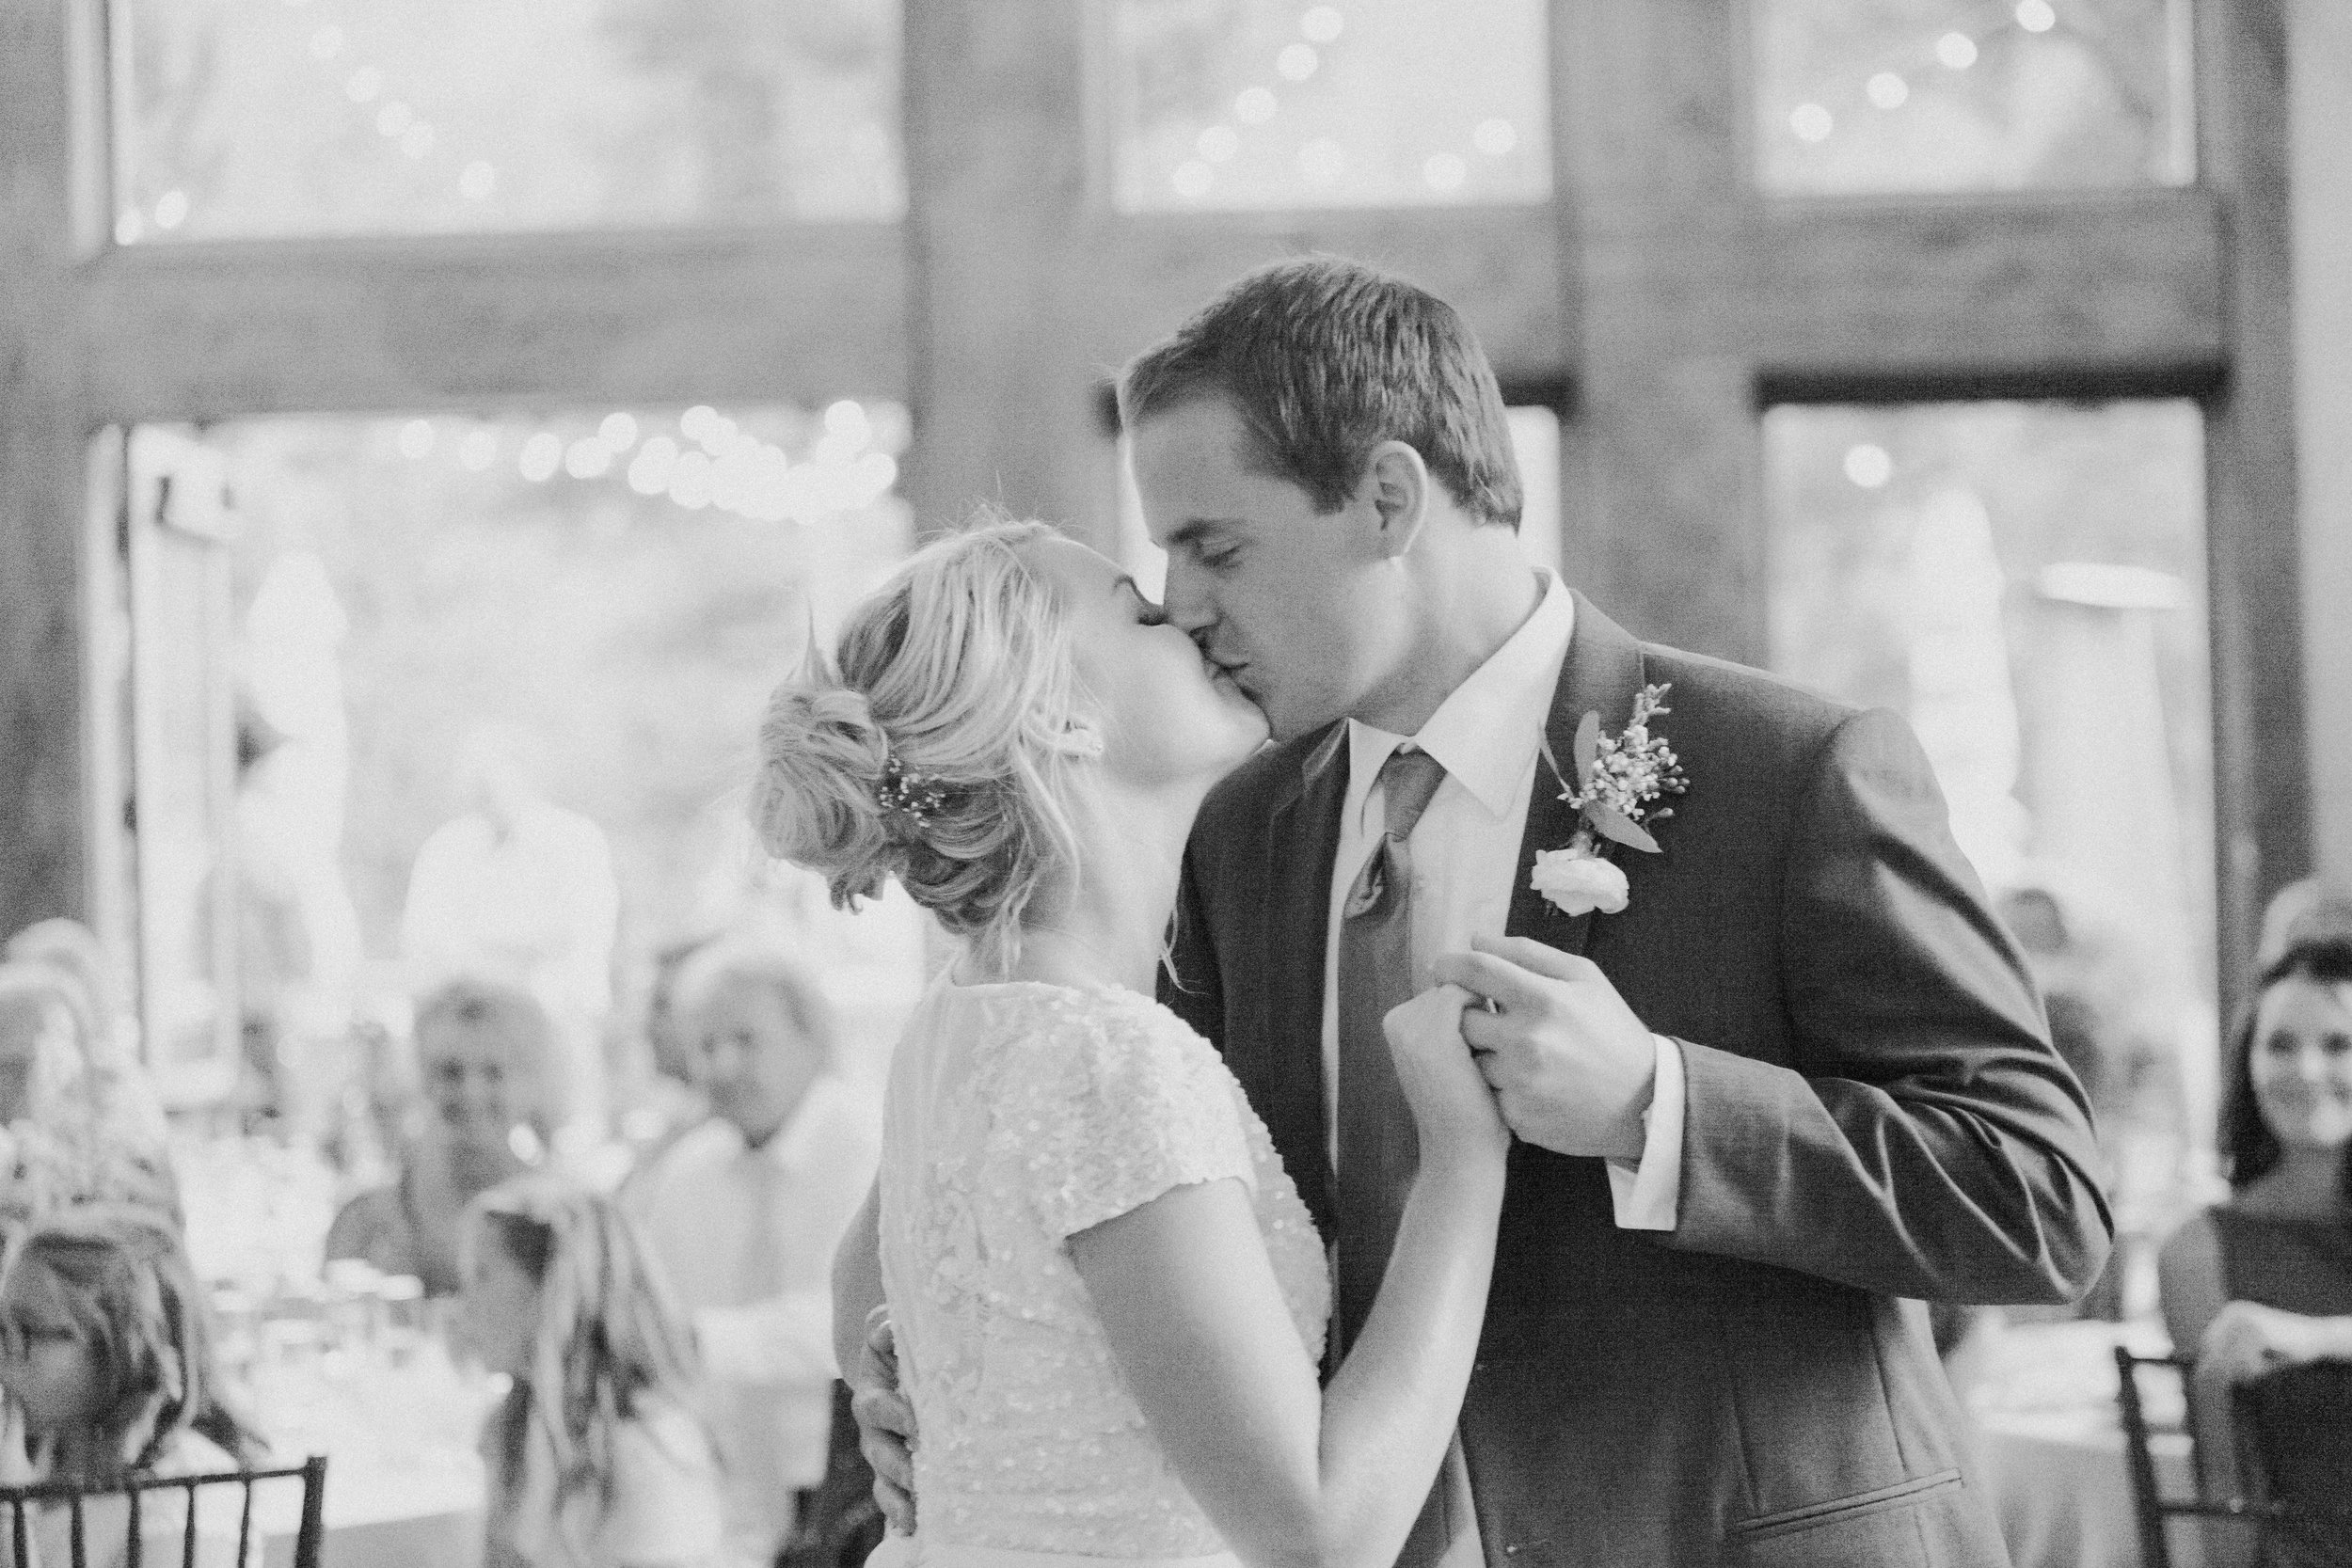 Colorado photographer, Miranda L. Sober Photography shares wedding photography and wedding dance